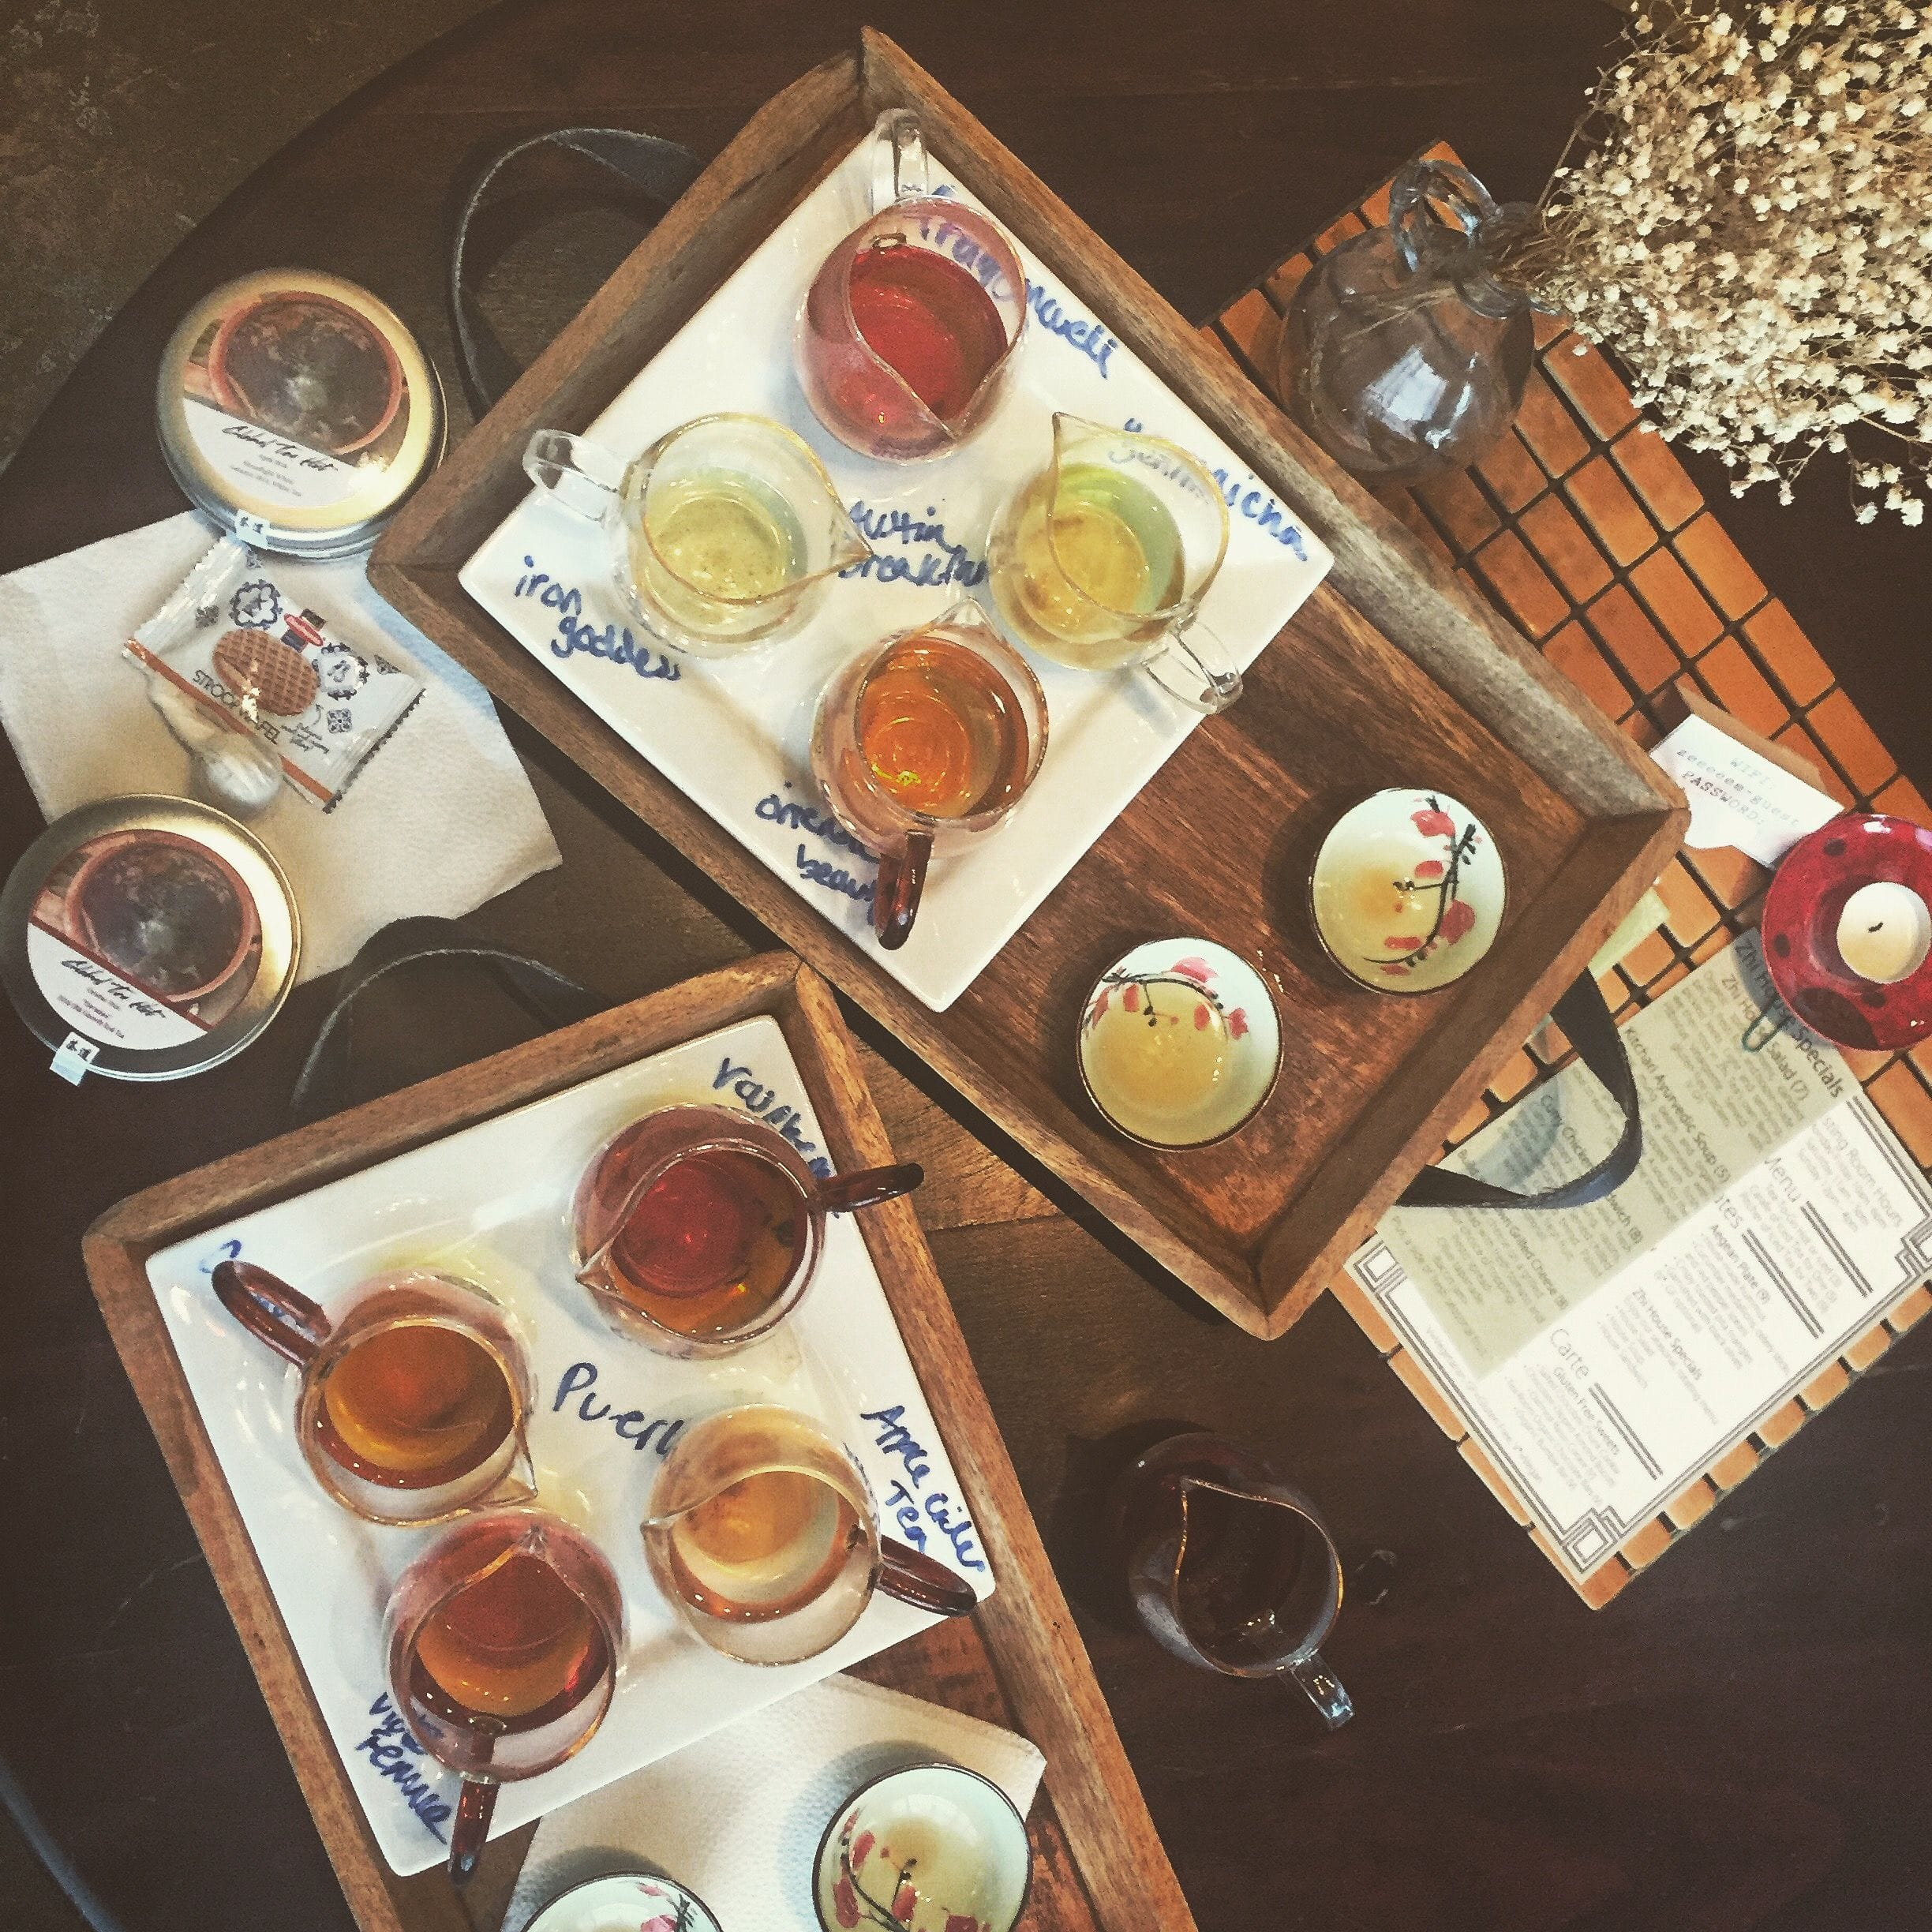 Tea tasting trays with several types of brewed tea